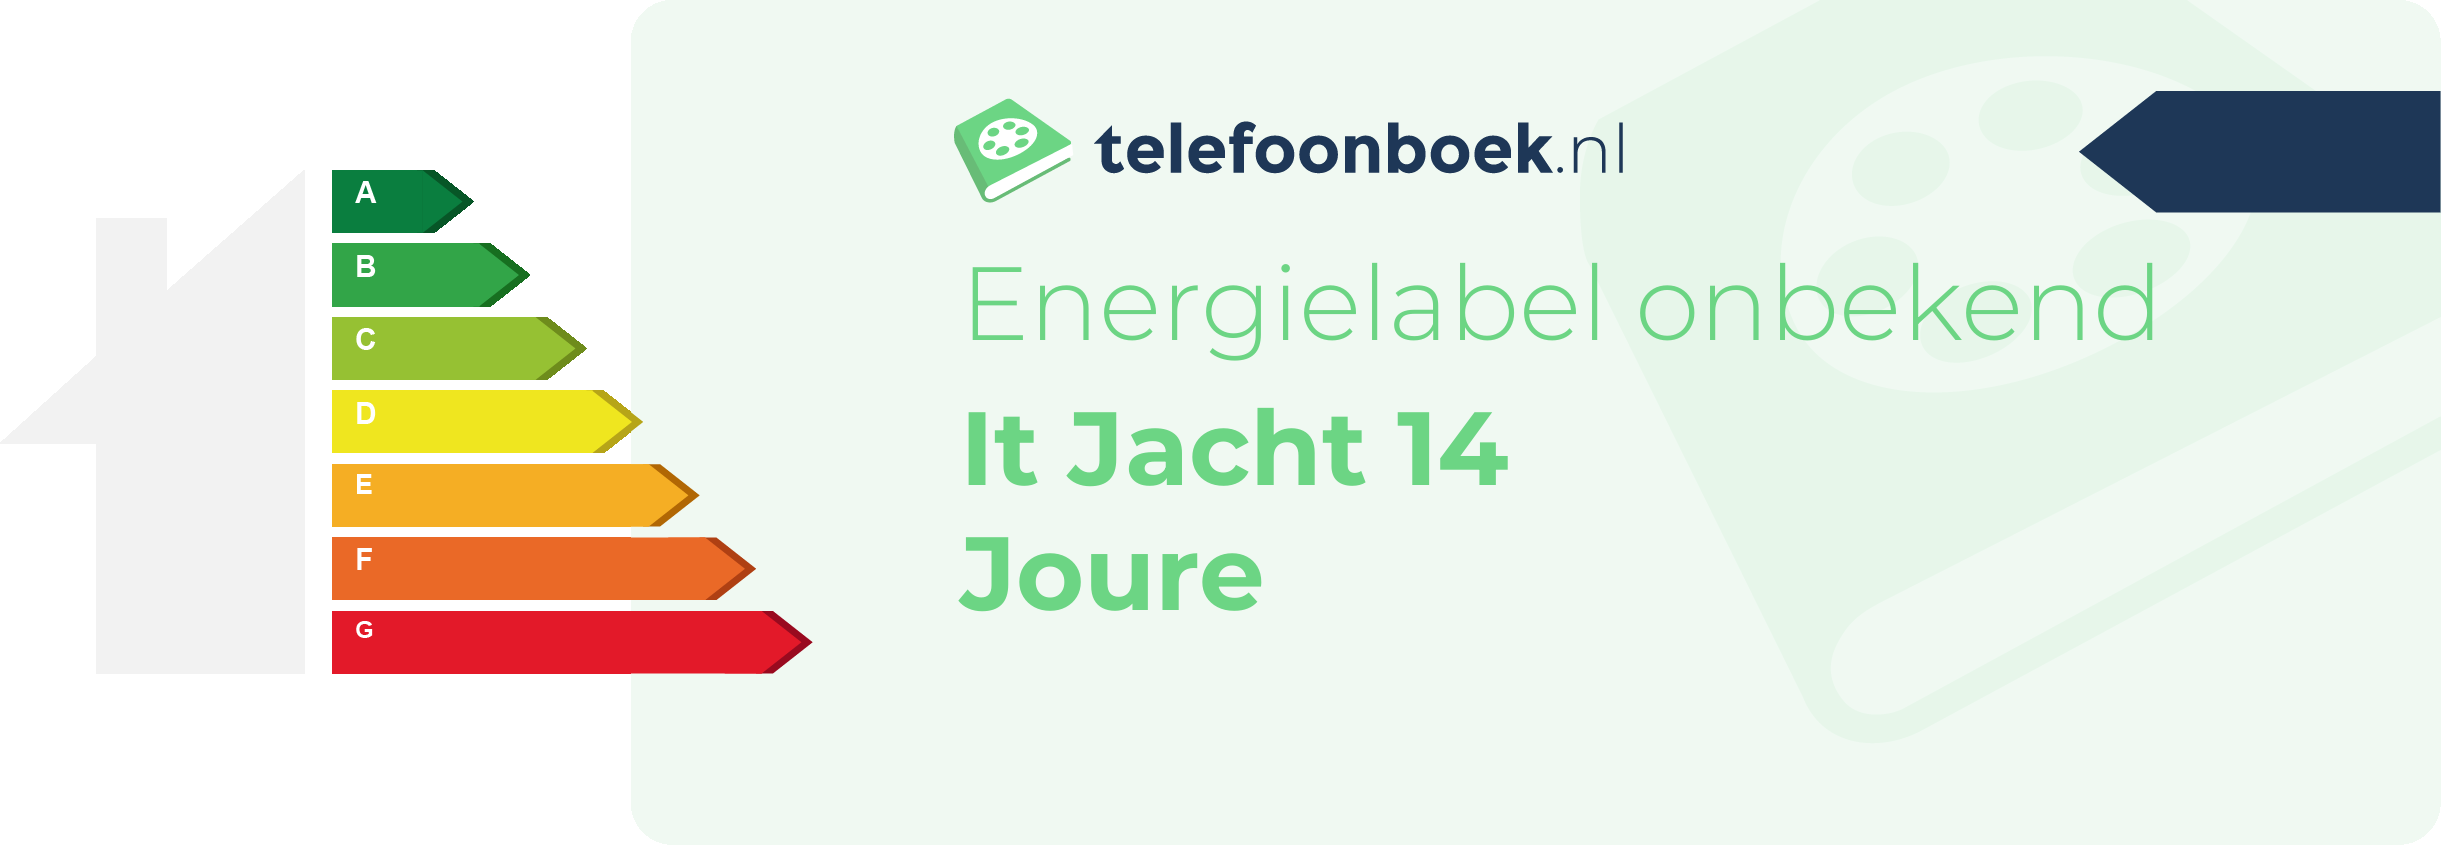 Energielabel It Jacht 14 Joure